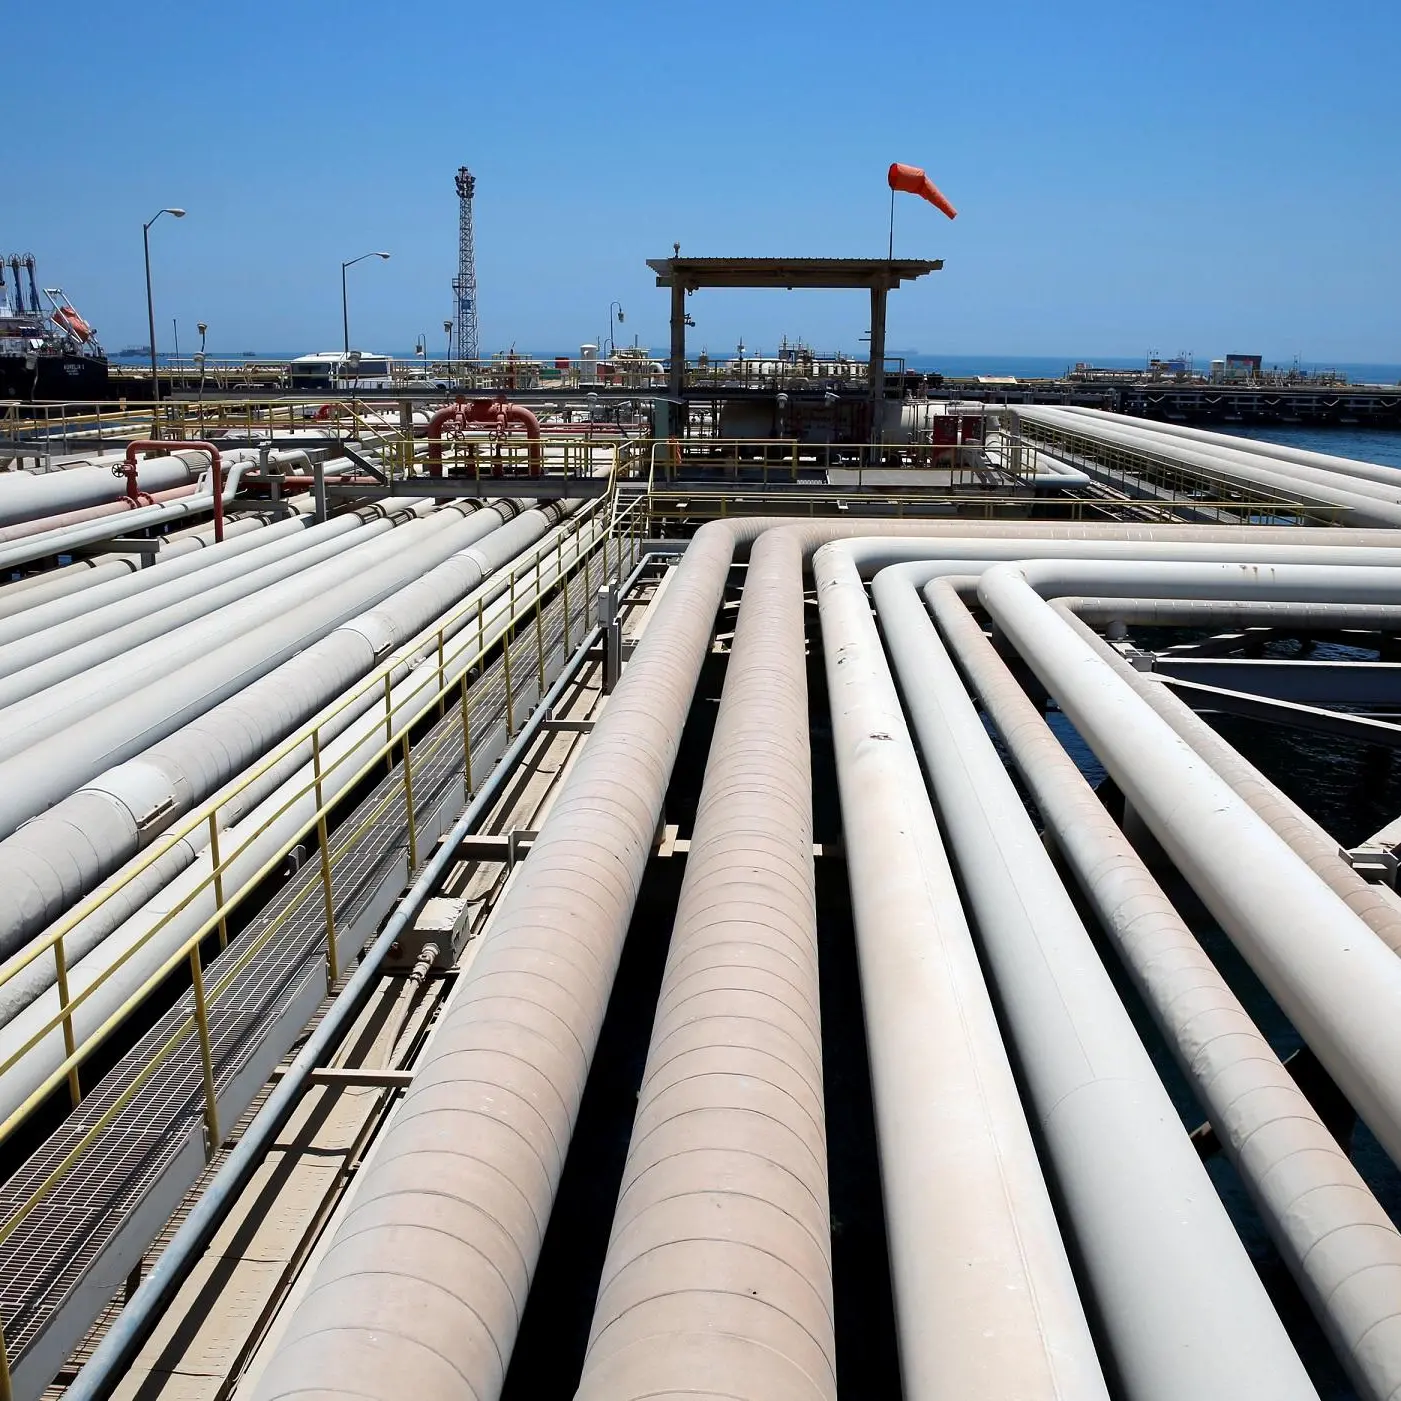 Saudi Arabia's oil exports value jumps 123% in October